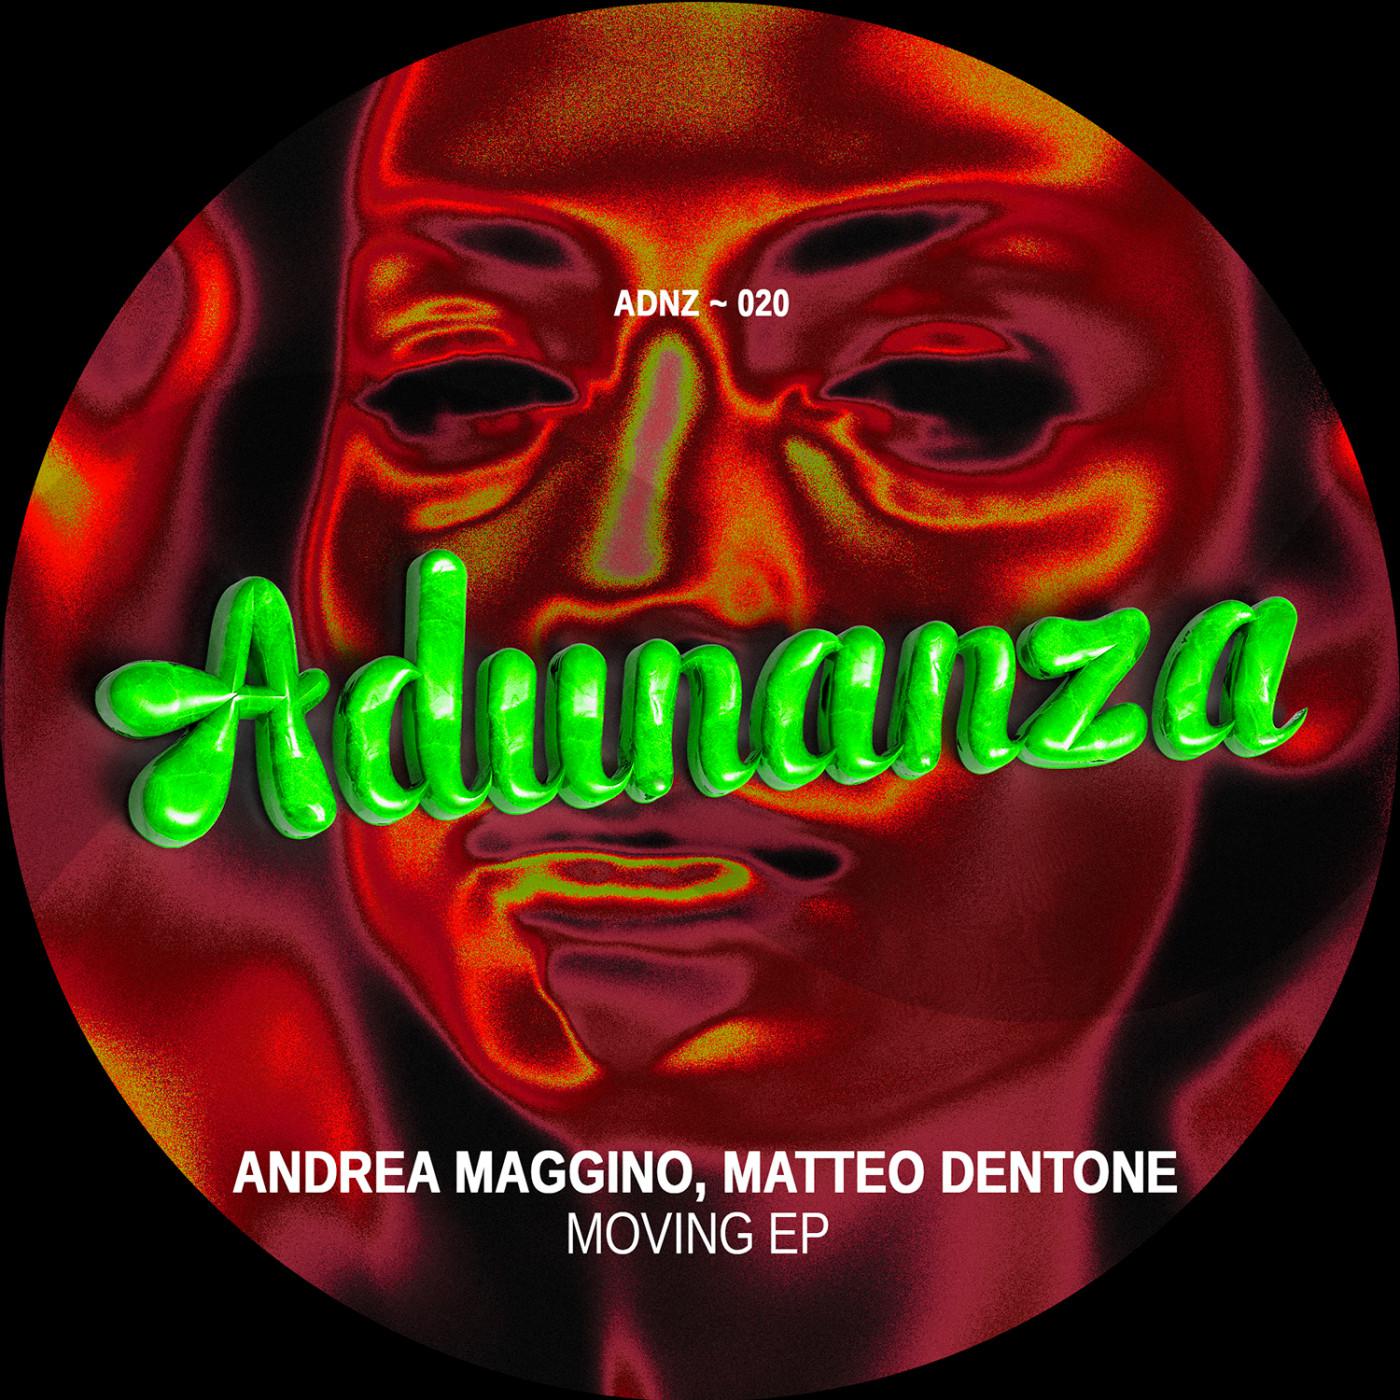 Andrea Maggino - Watch (Original Mix)